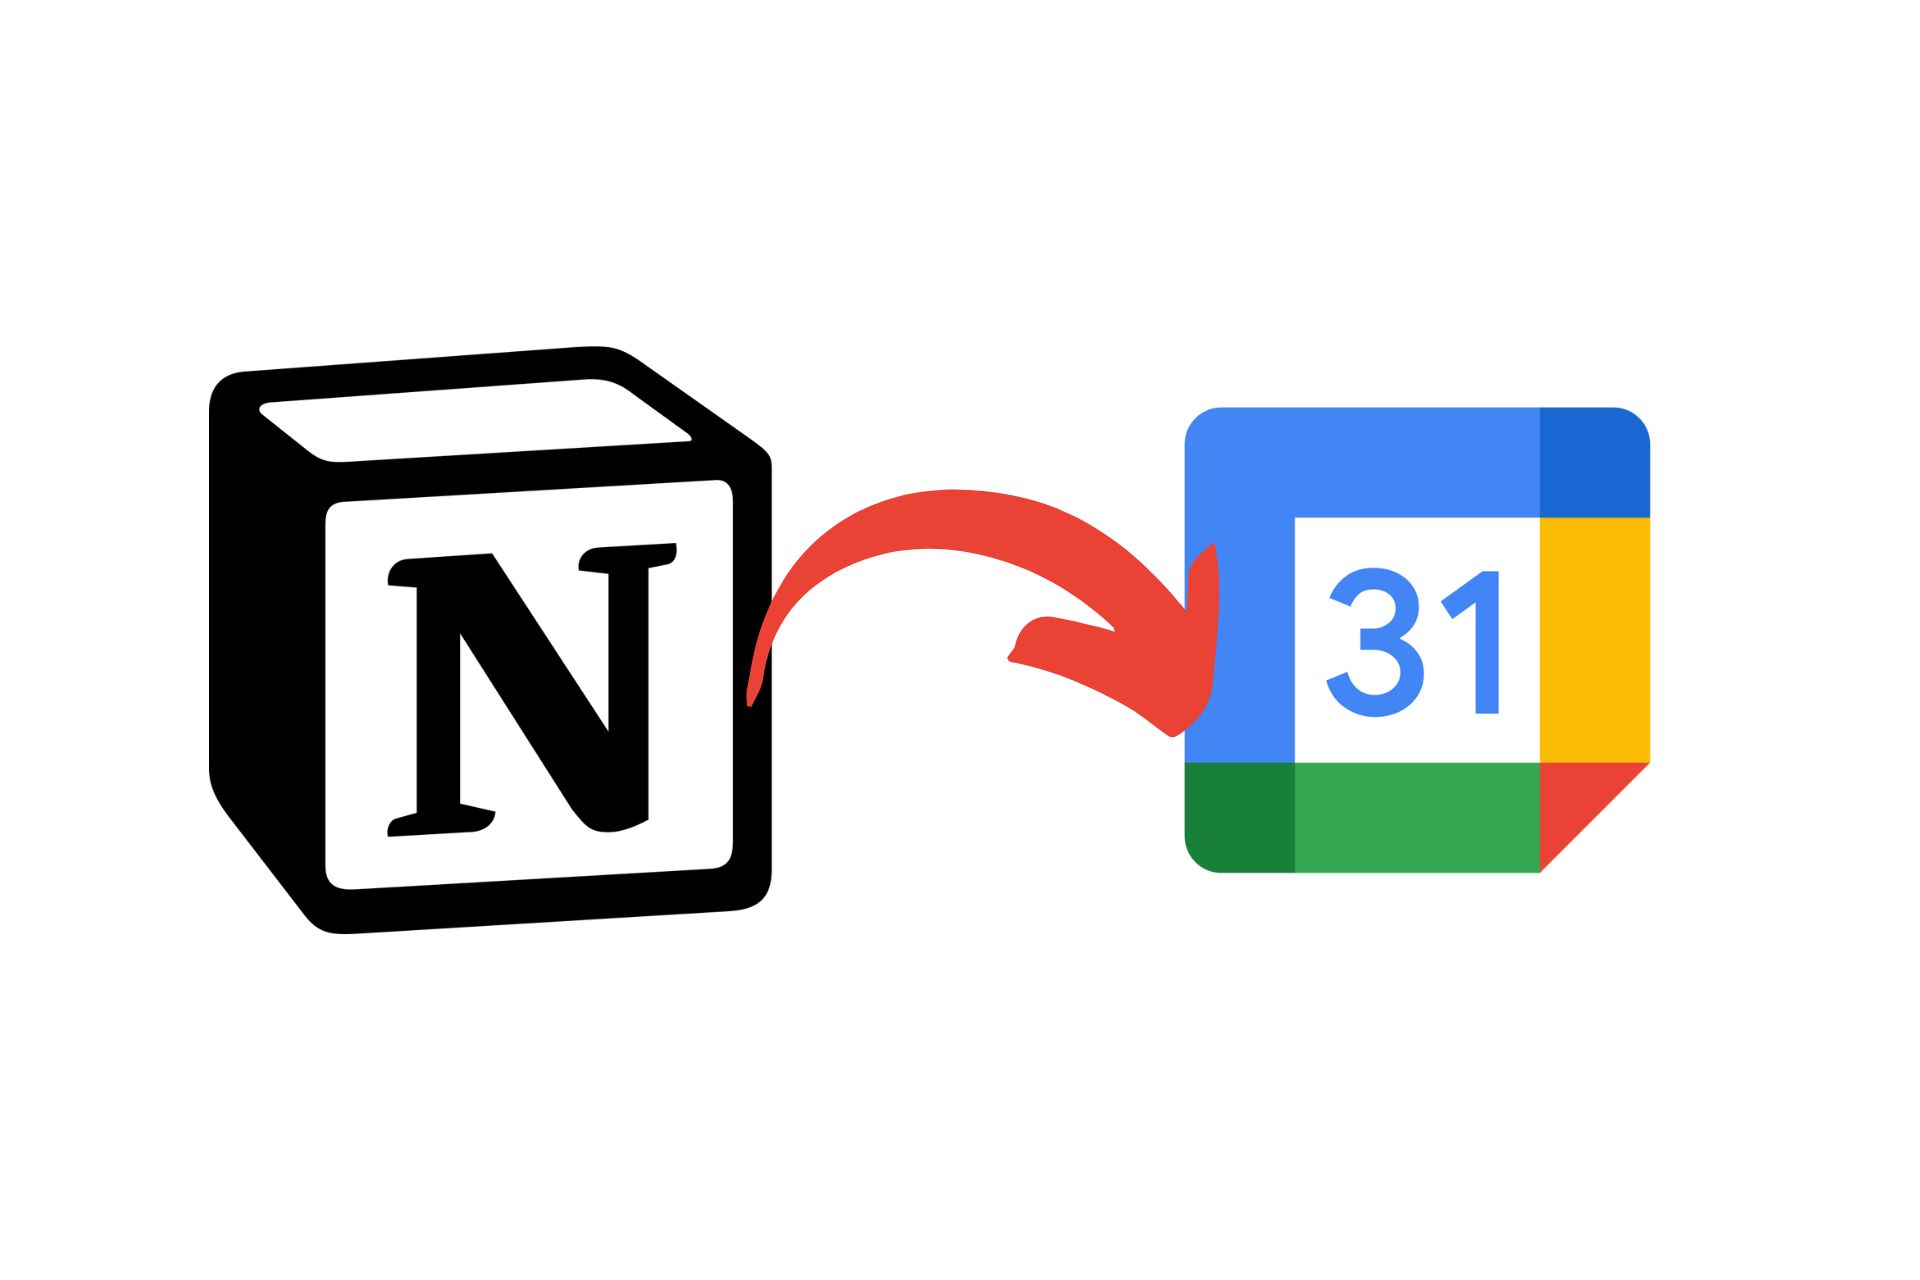 Notion and Google Calendar logos